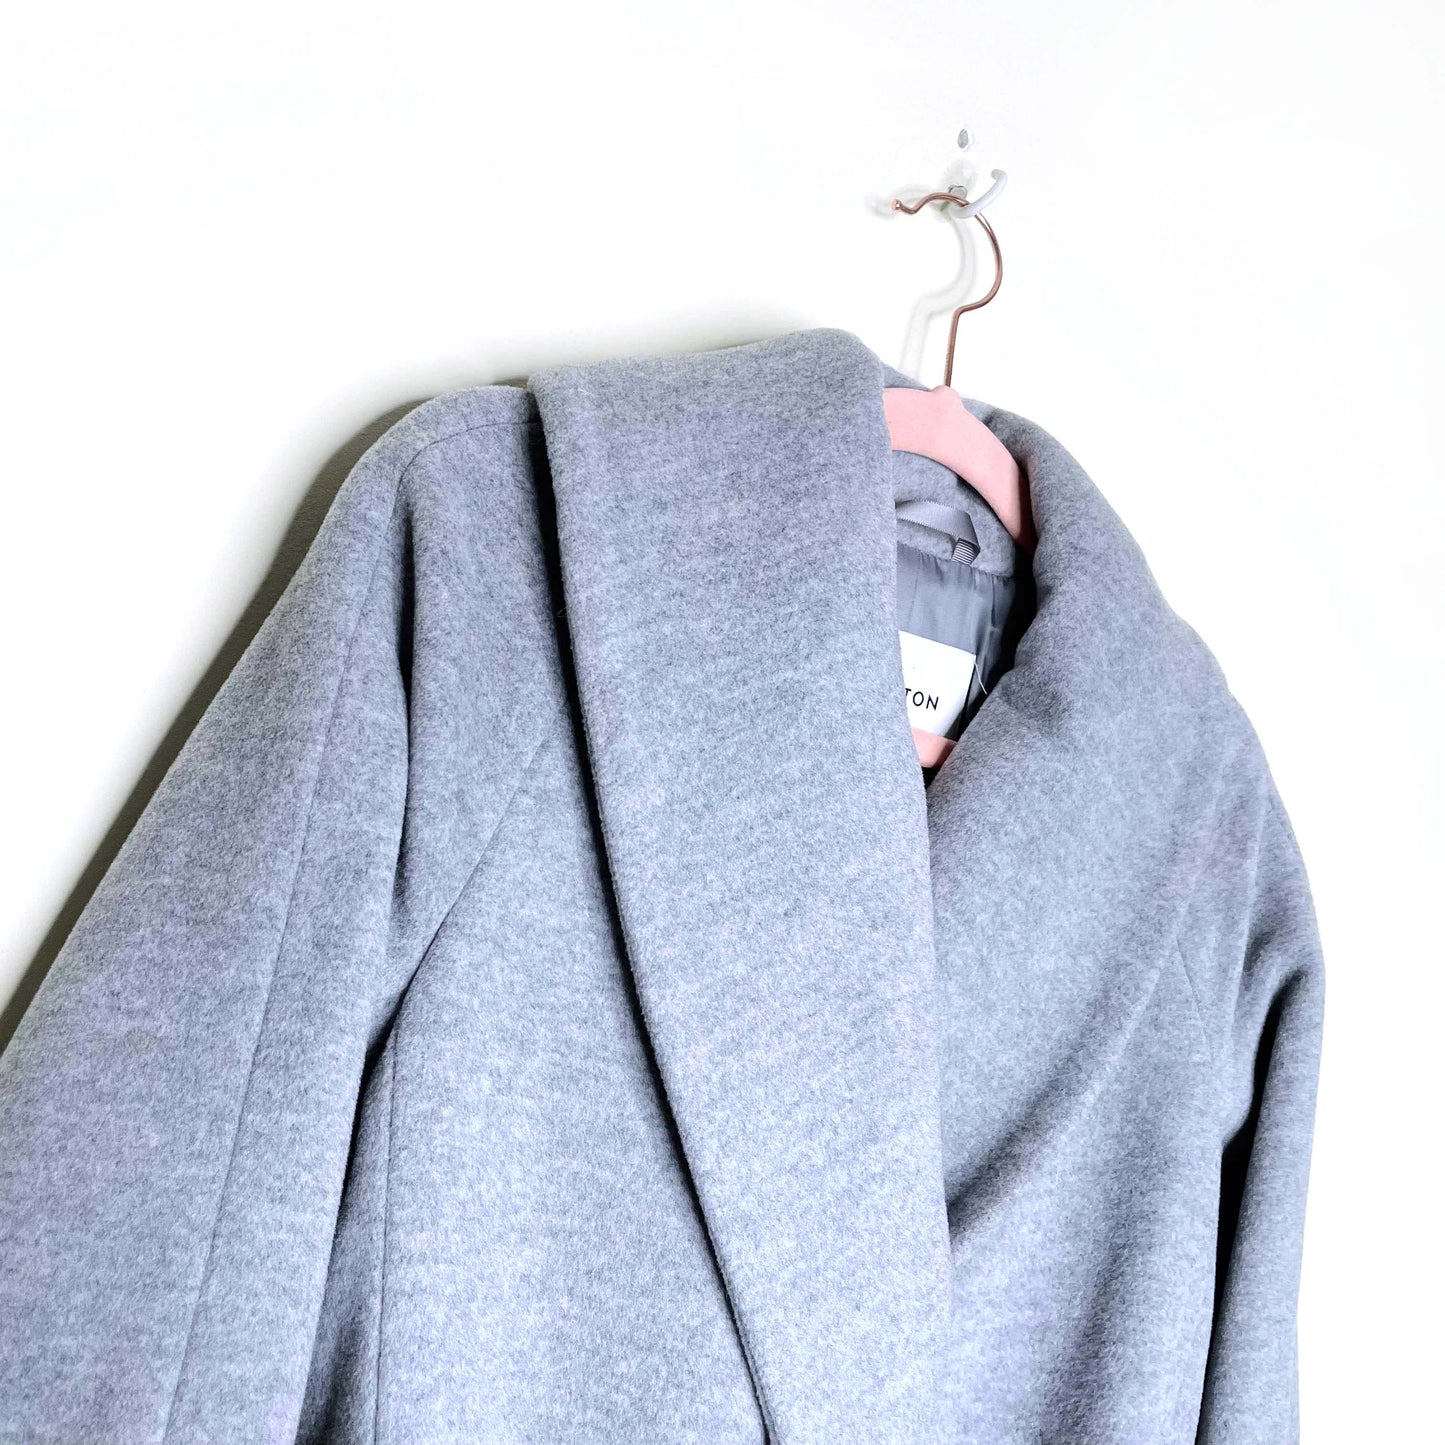 babaton wool sian tie waist wrap coat in heather comet - size xxs